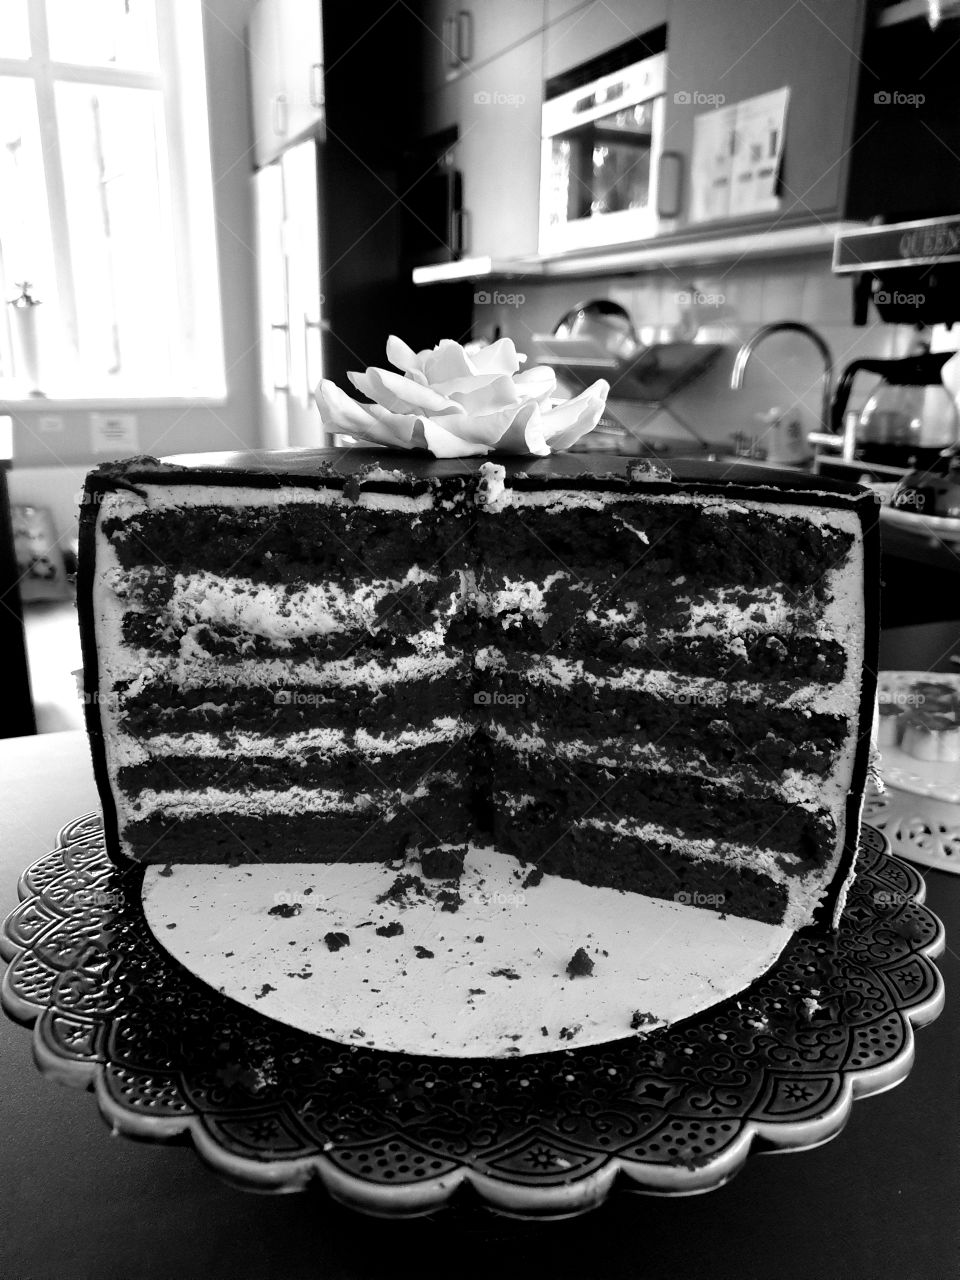 Half eaten cake in a kitchen. Black and white.